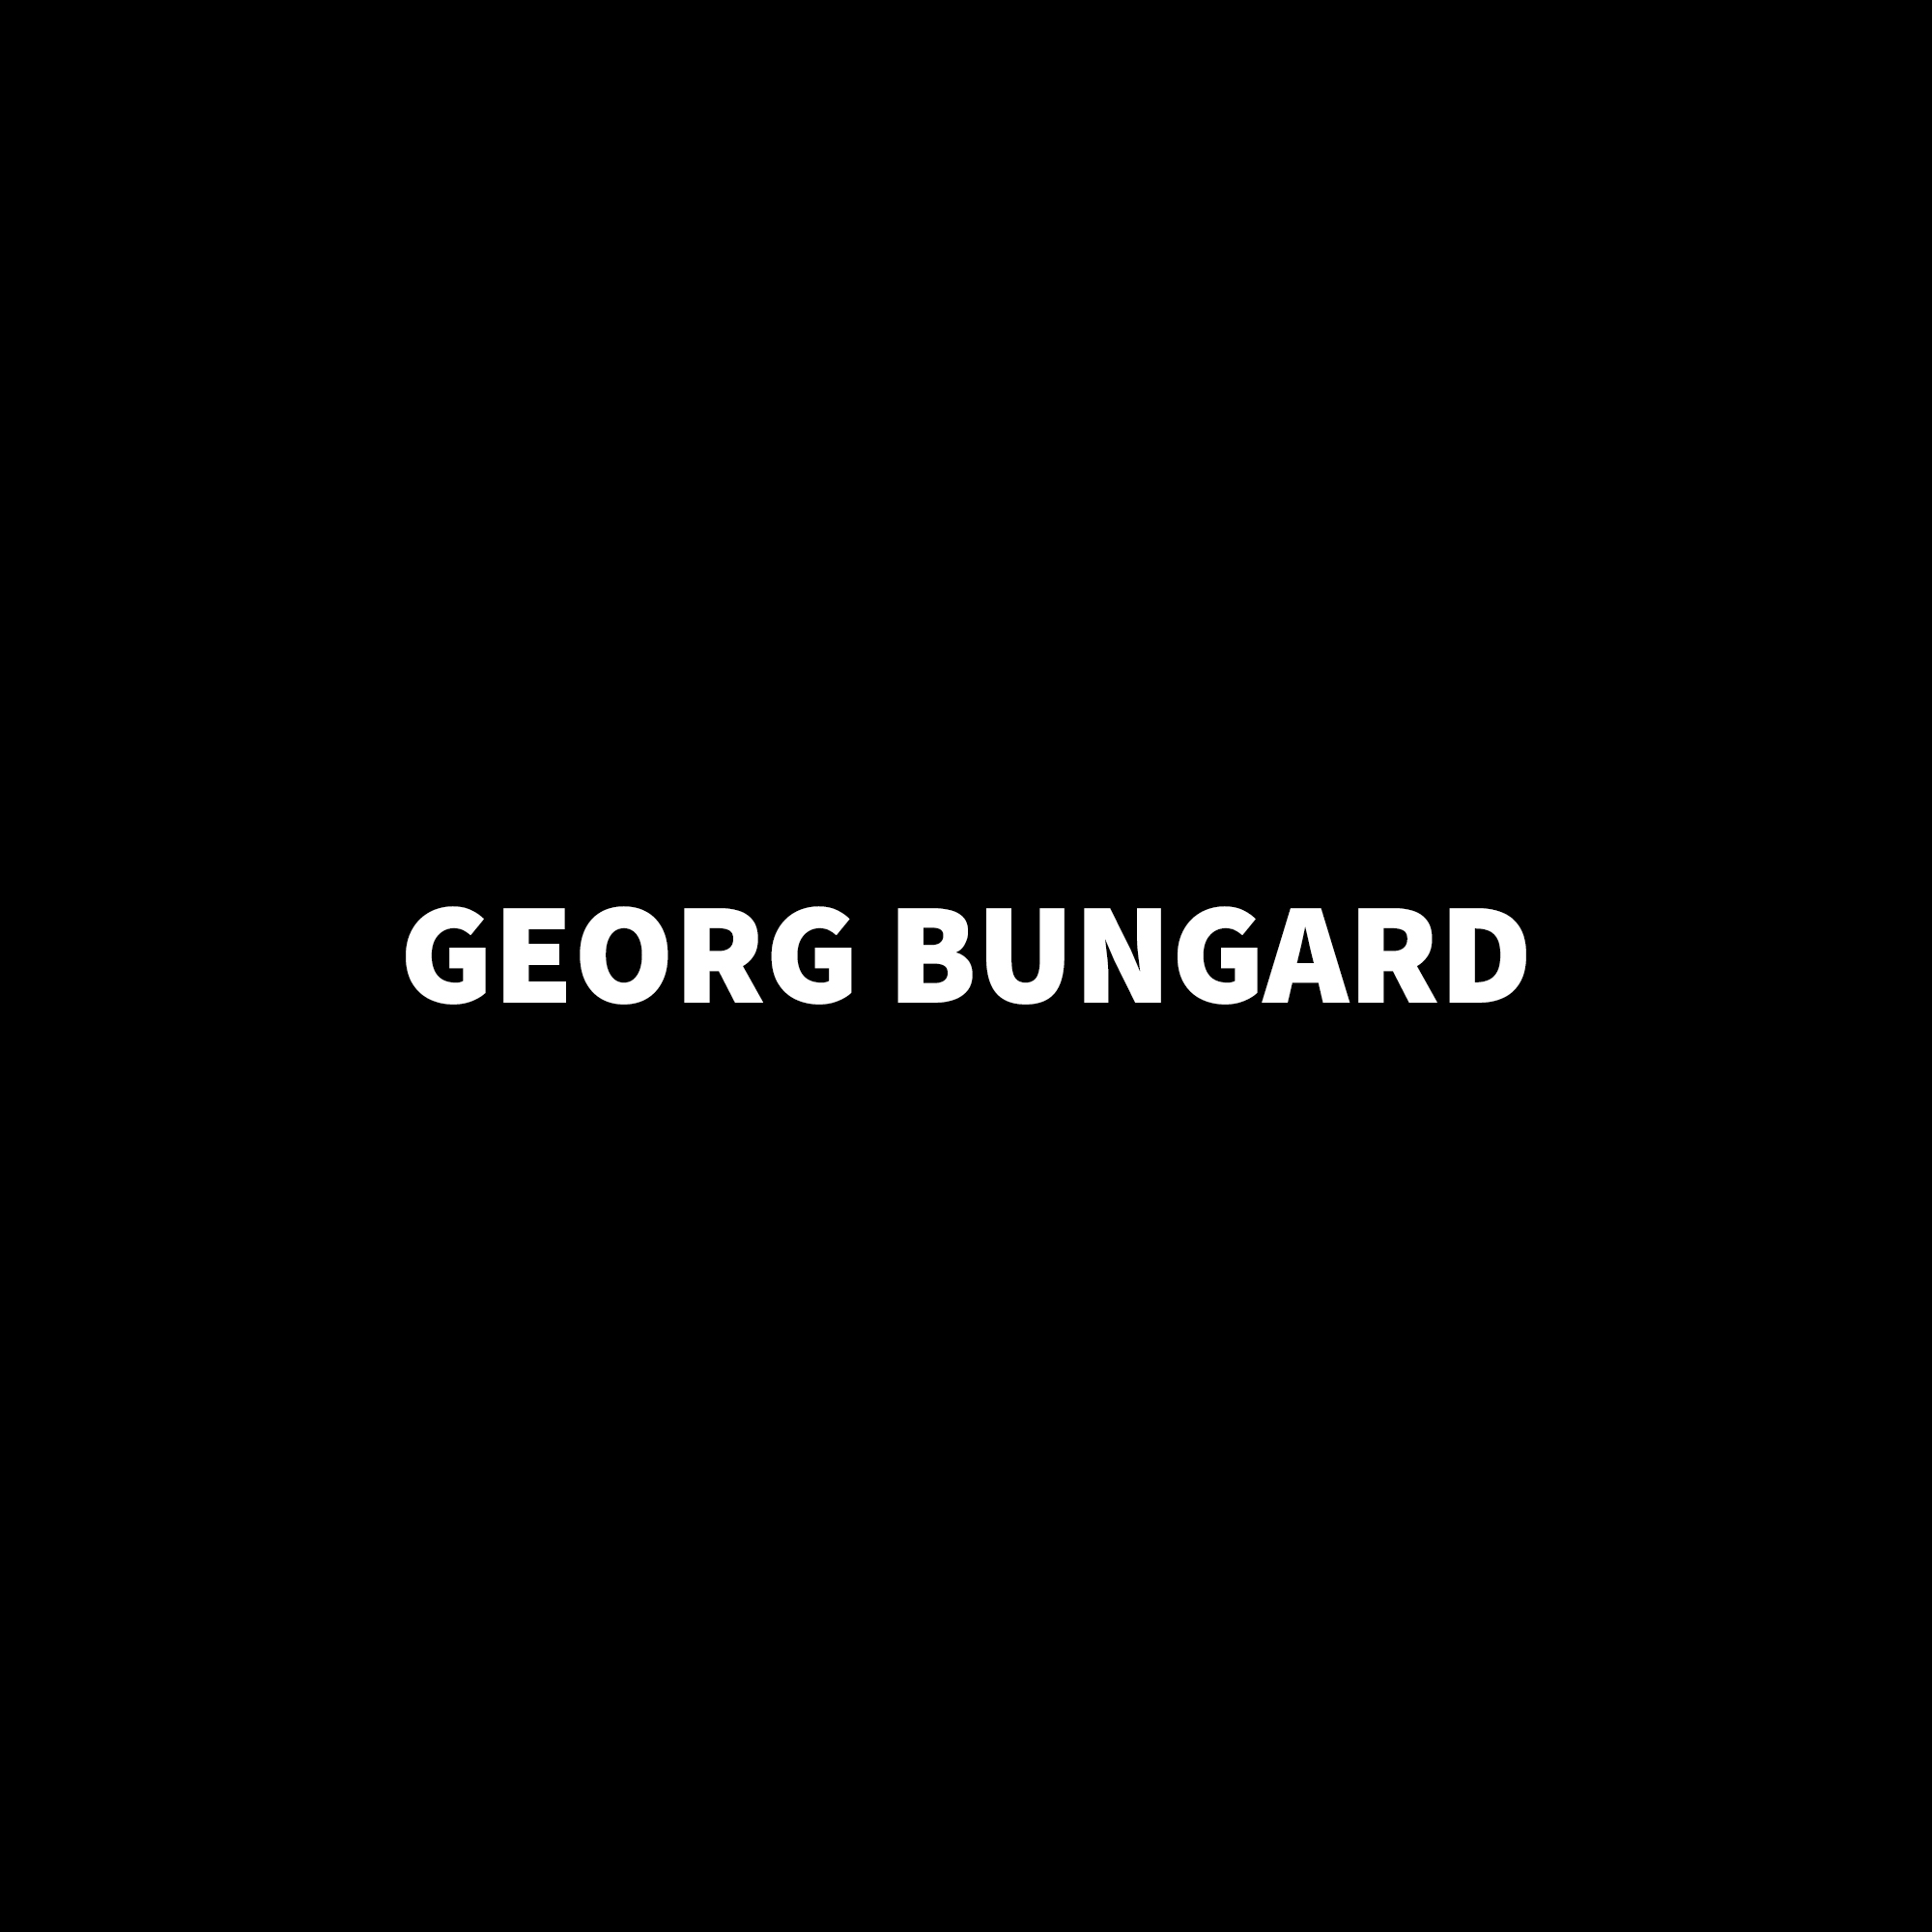 Georg Bungard